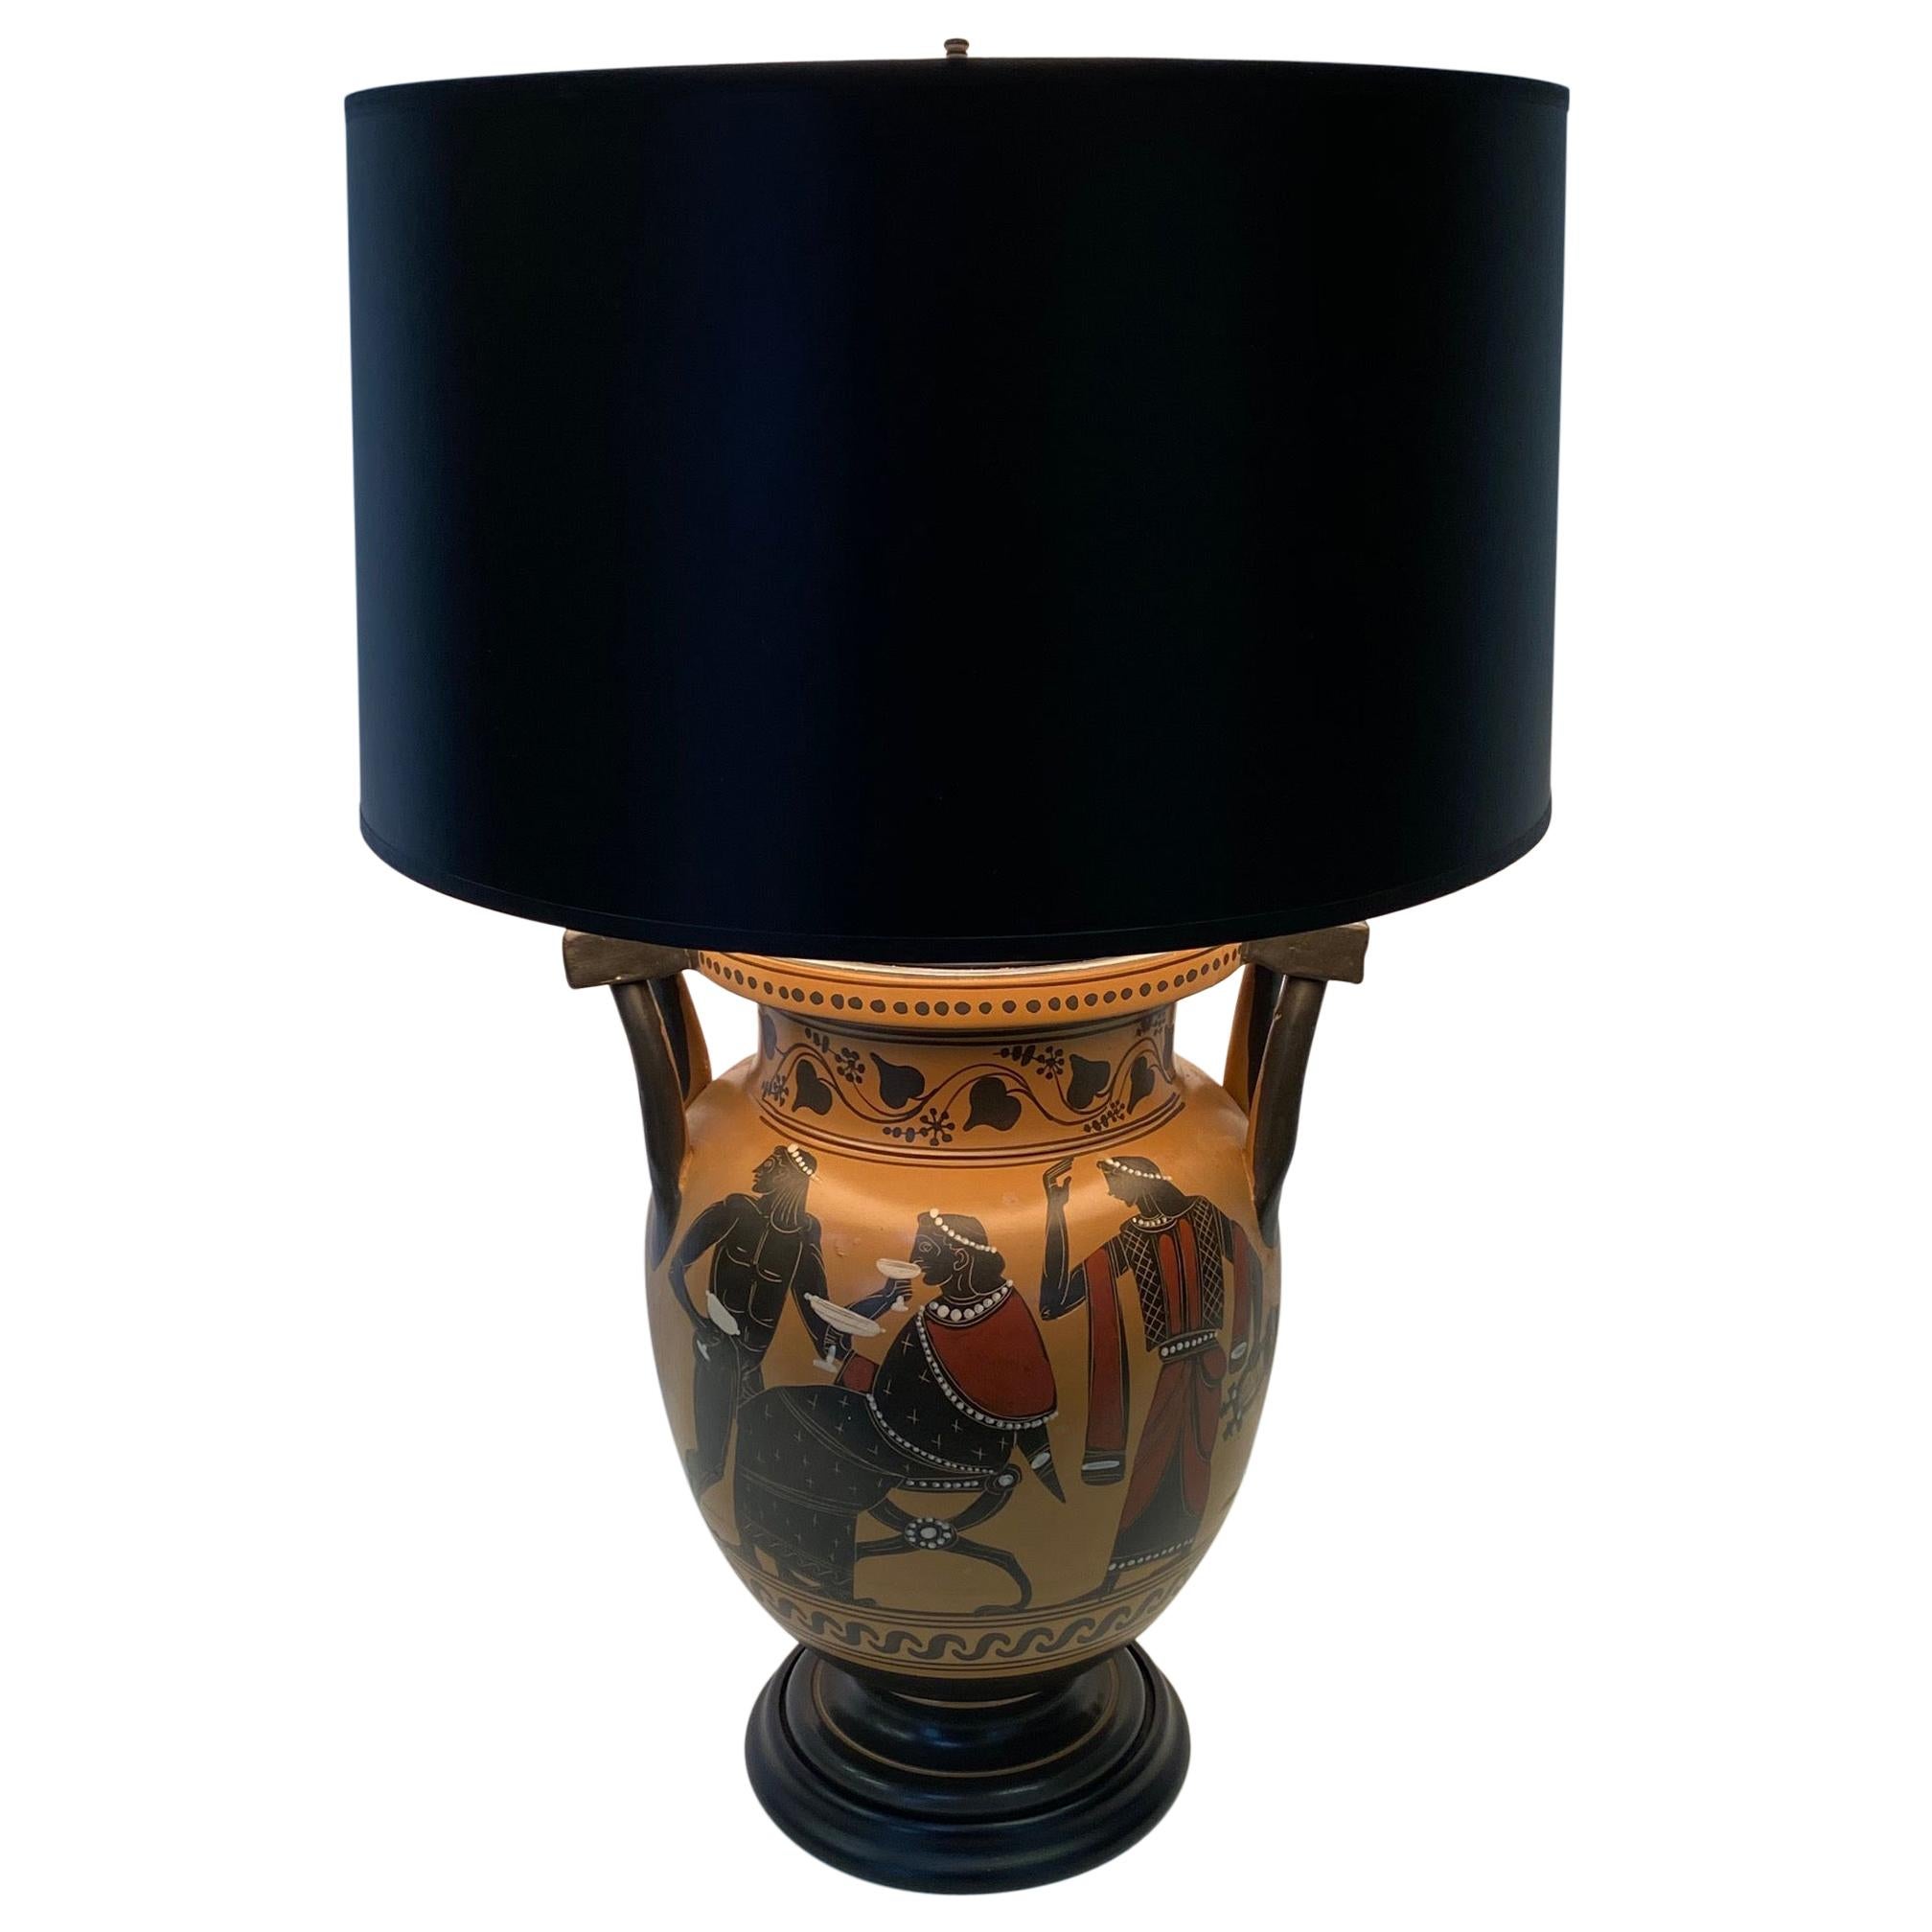 Richly Elegant Classical Style Greek Vase Lamp For Sale